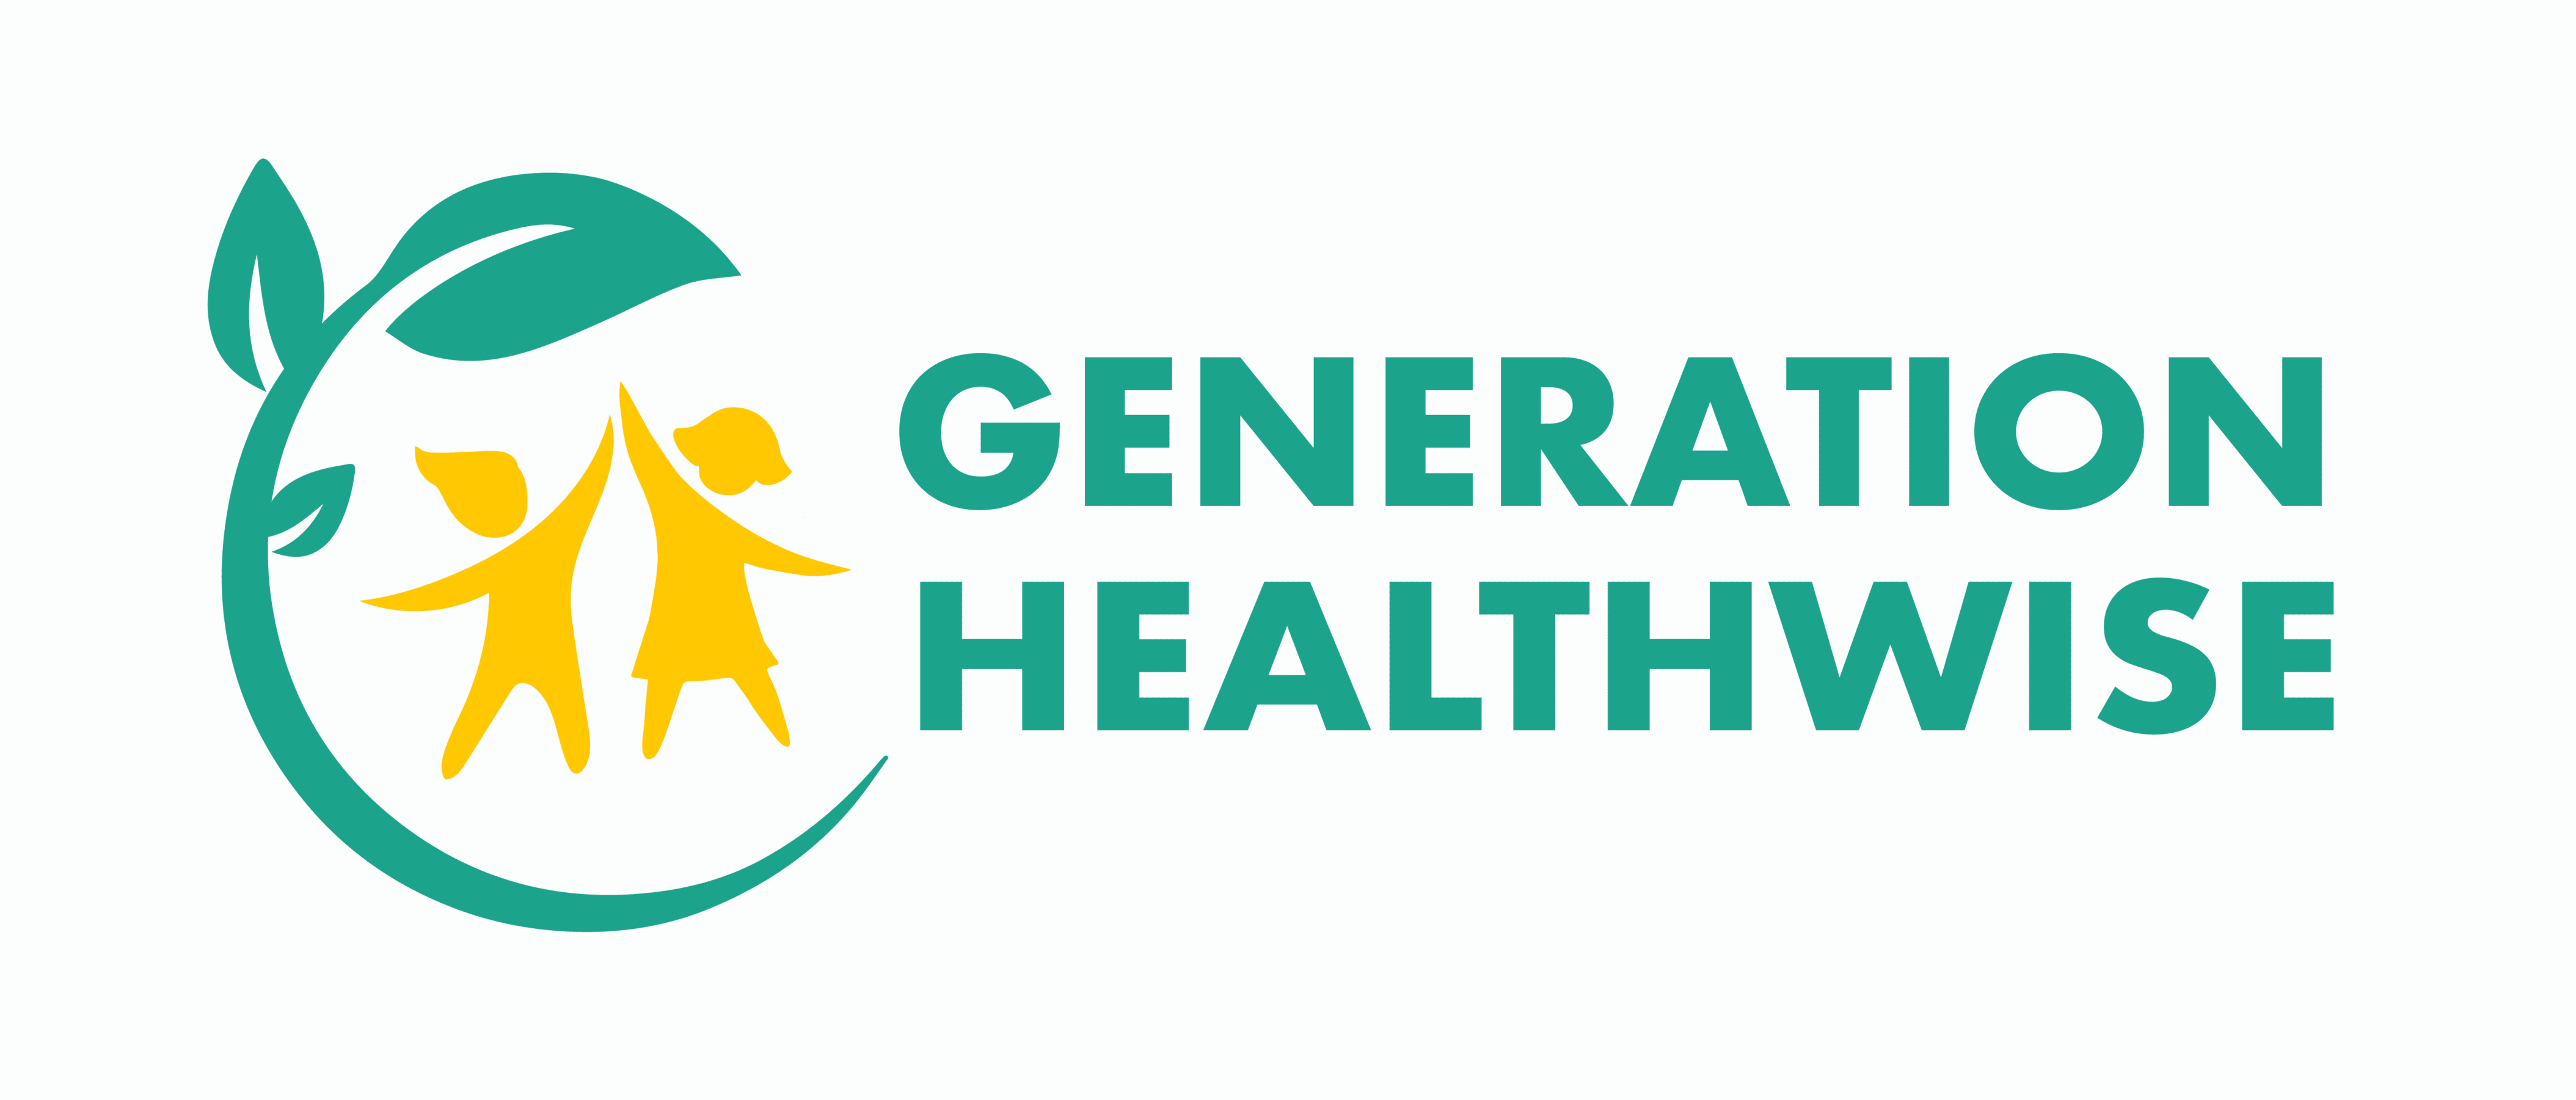 Generation HealthWise